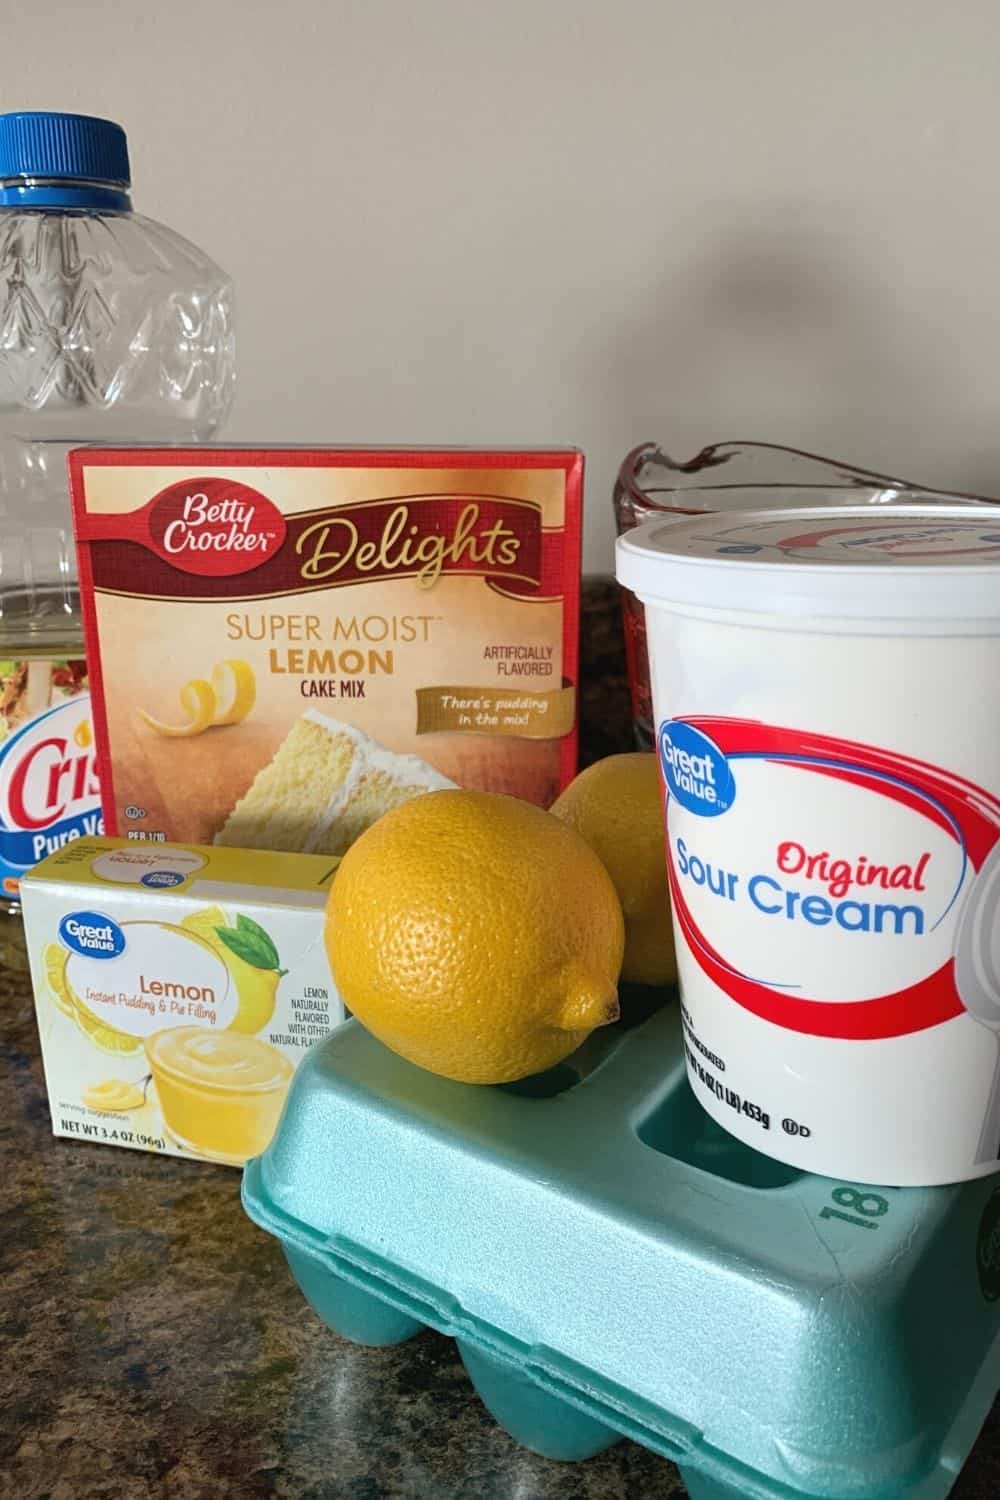 ingredients for the lemon cake, including a lemon cake mix, lemon pudding mix, vegetable oil, fresh lemons, eggs, and sour cream.